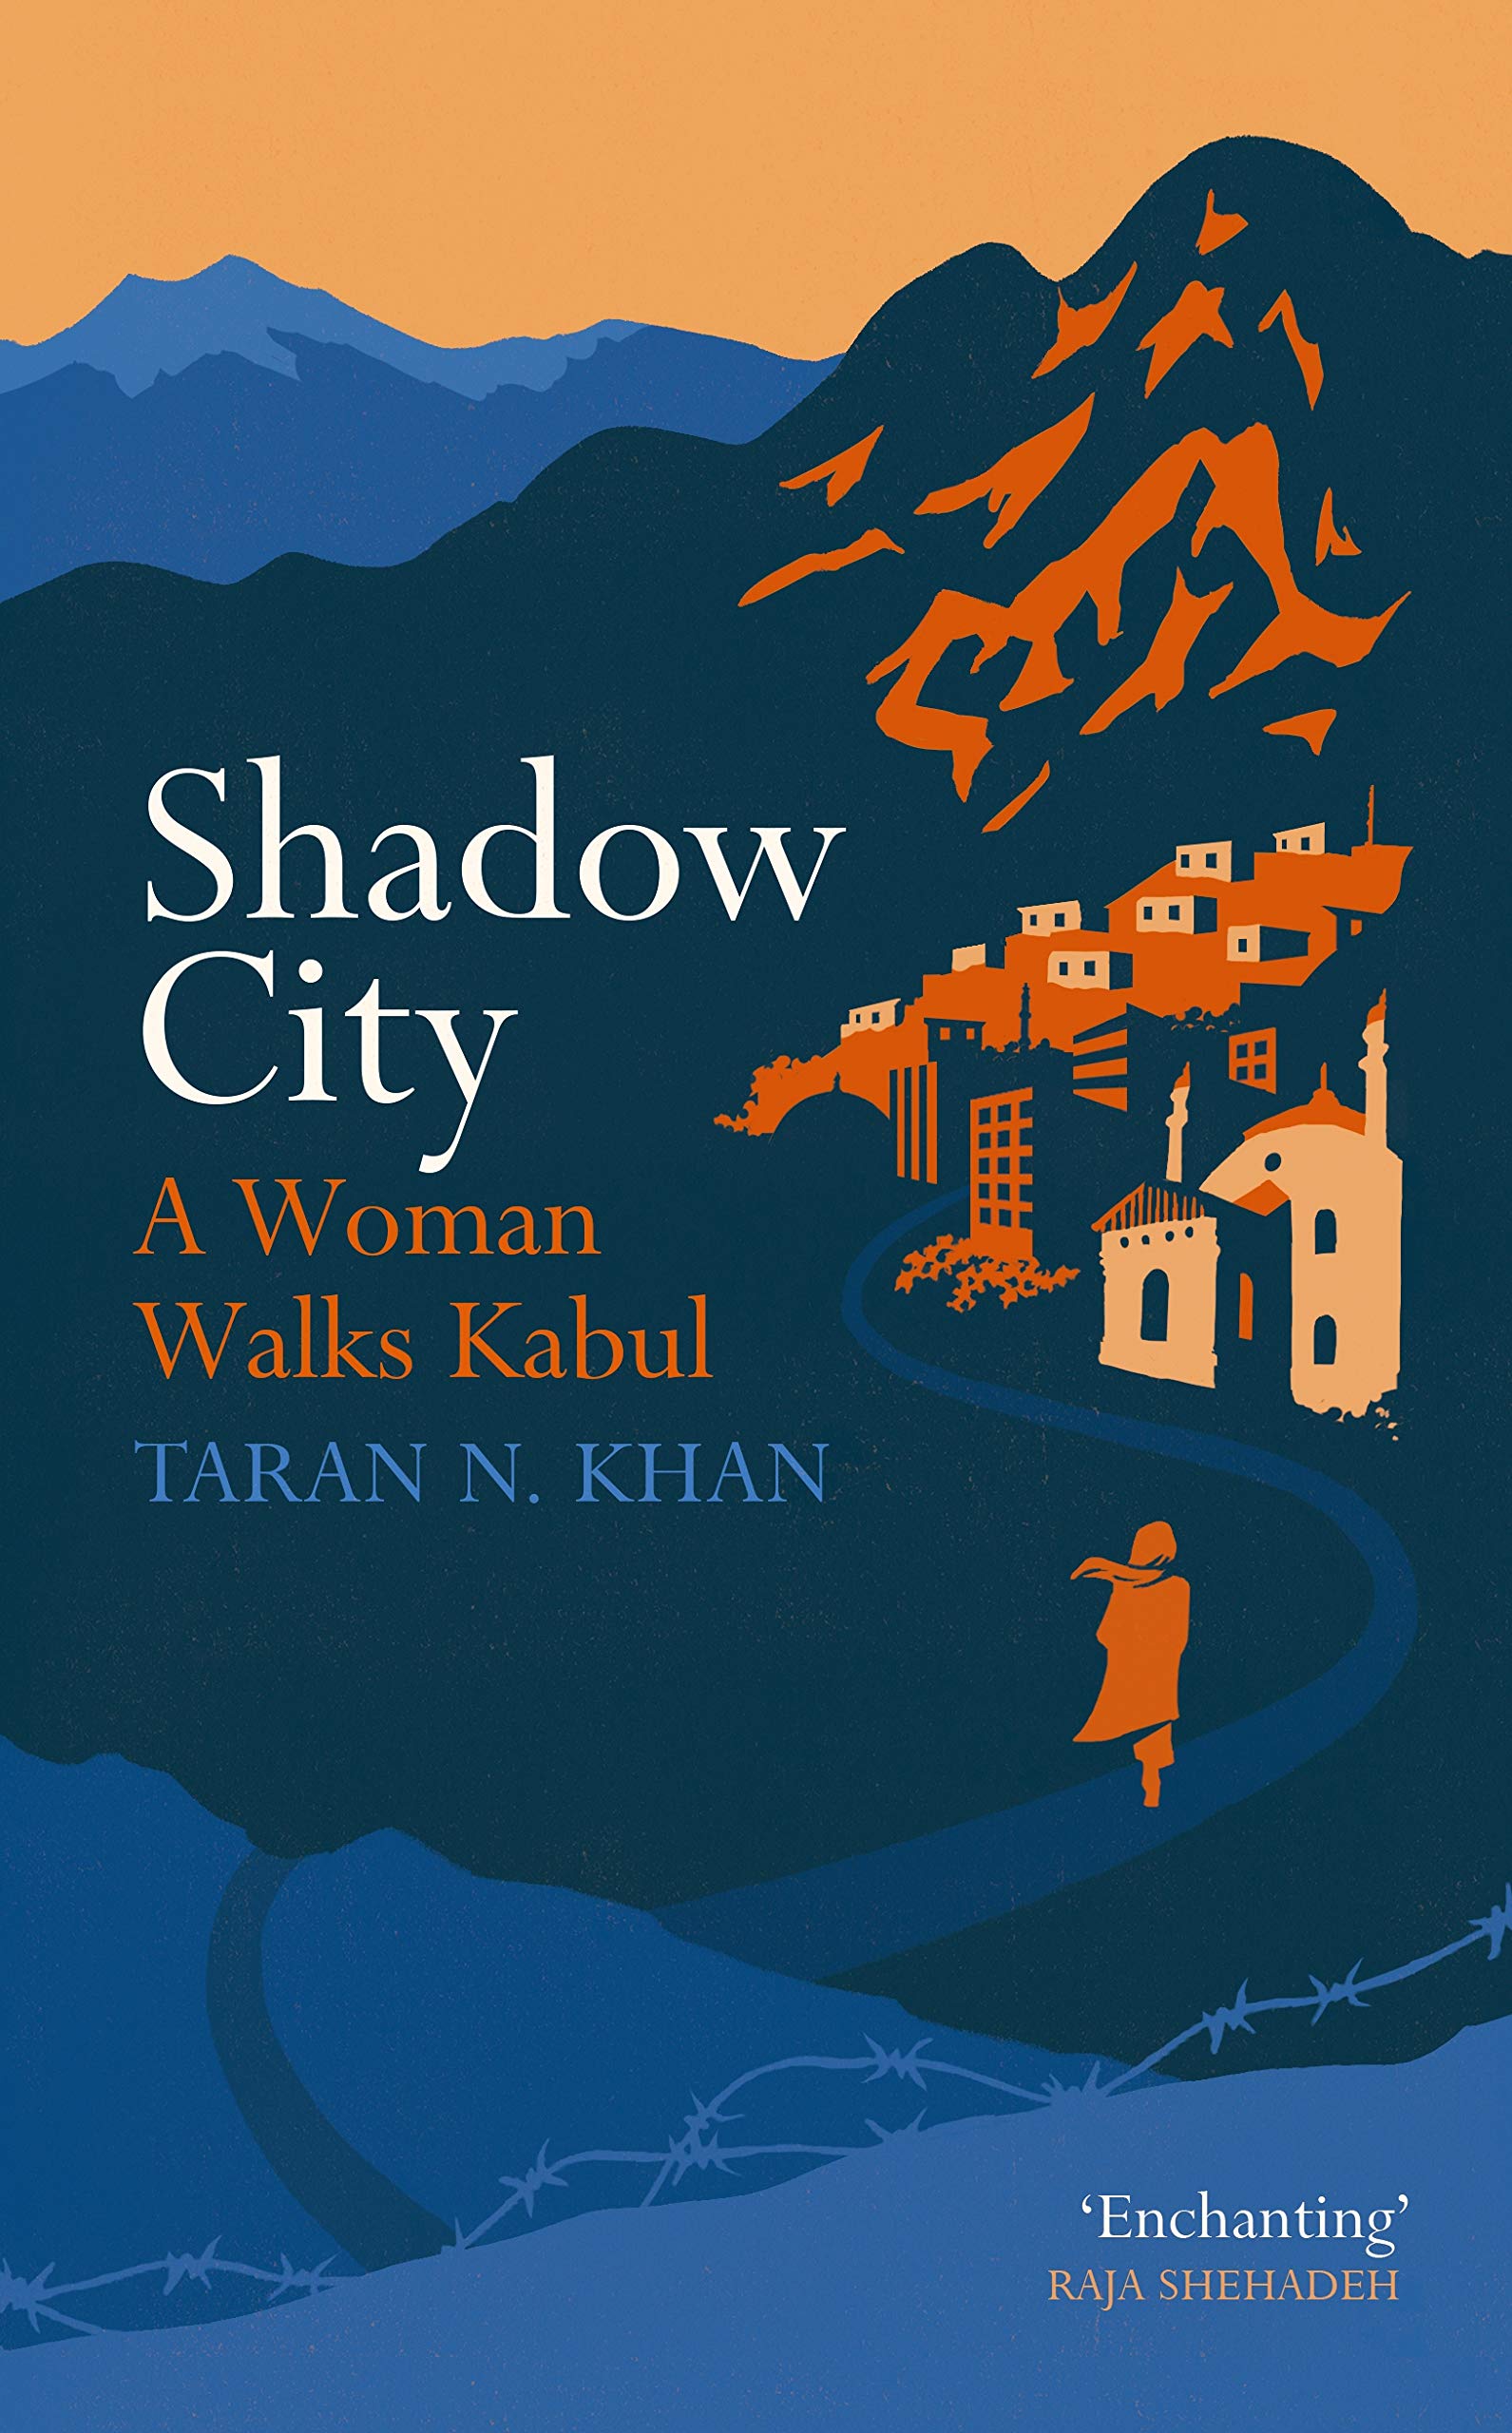 Buchcover Taran Khan: “Shadow City. A Woman Walks Kabul”, Chatto &amp; Windus 2019